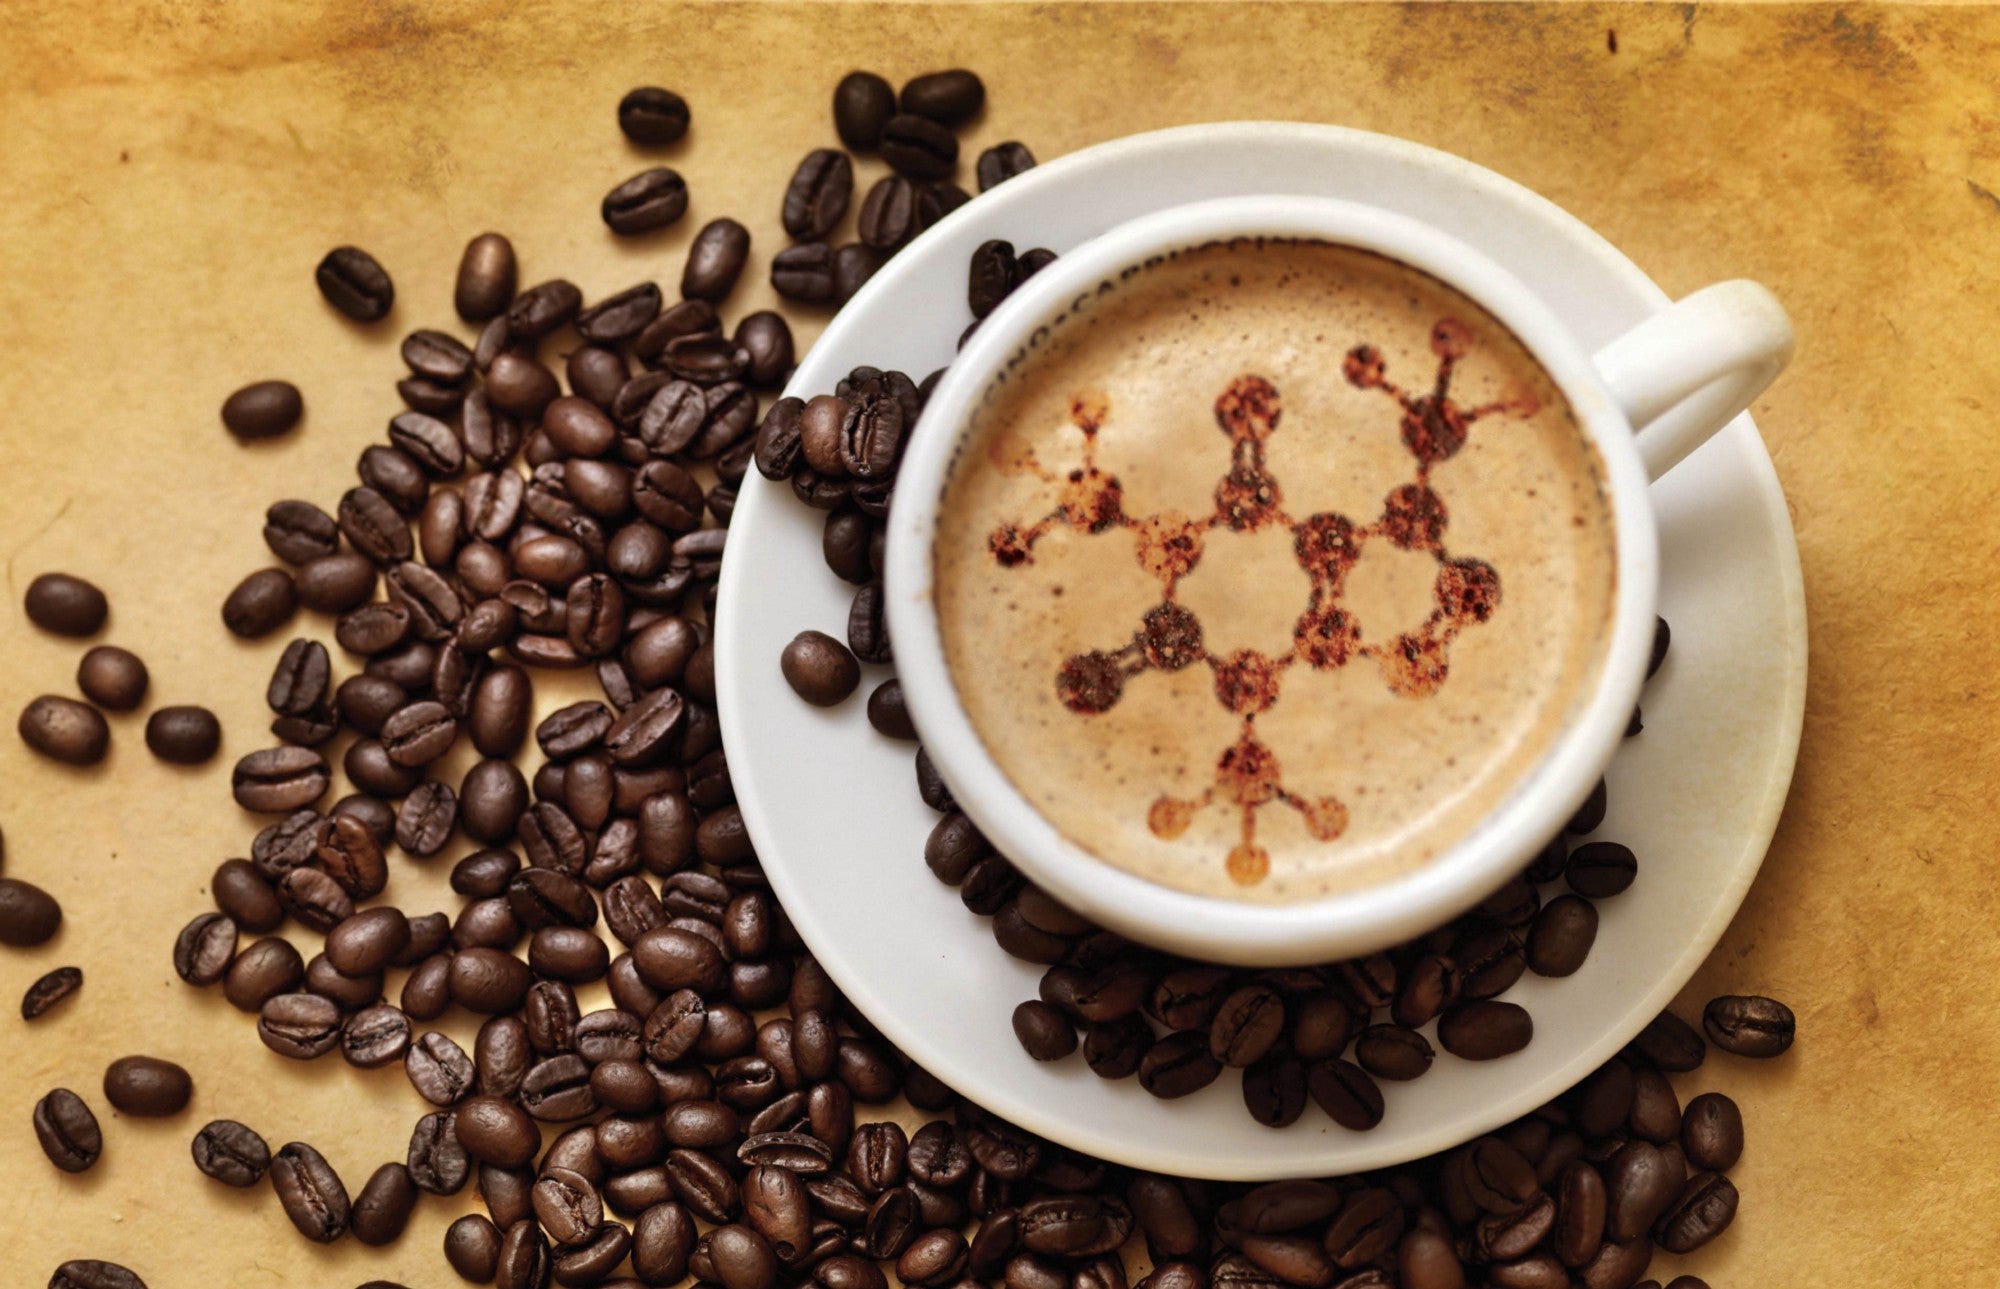 Benefits of Caffeine